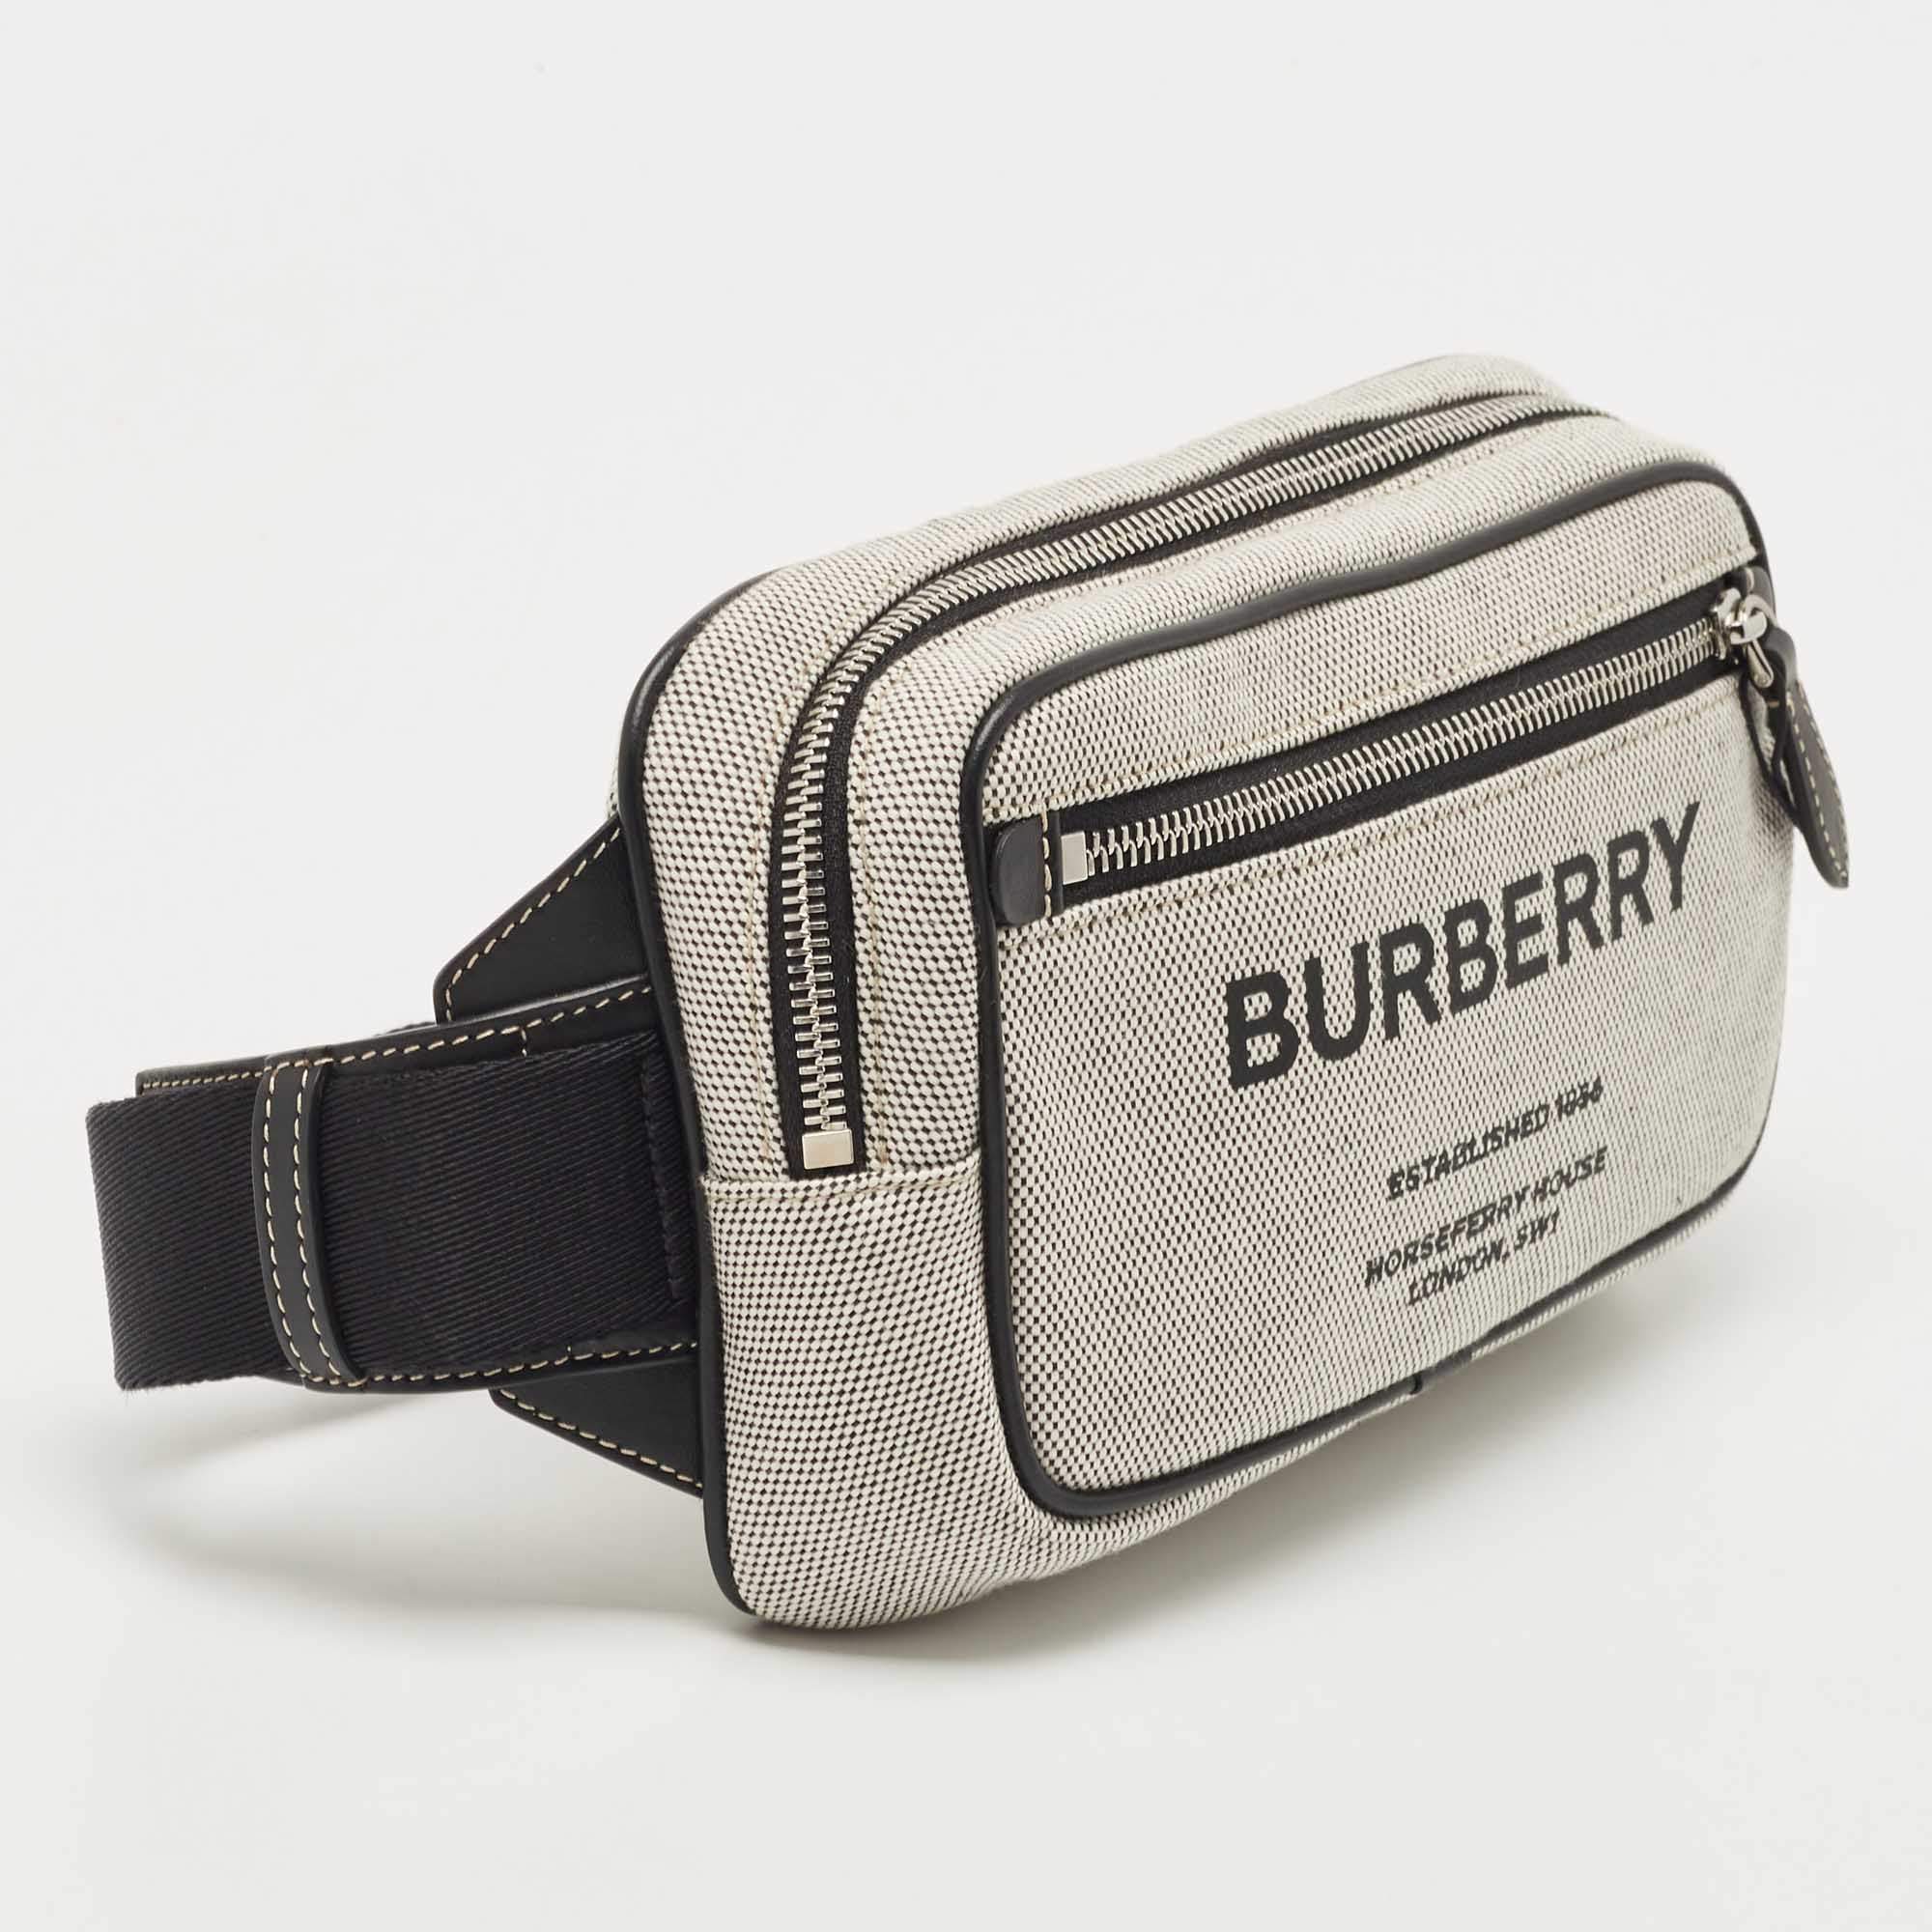 Burberry Tb Belt Bag Sale, SAVE 48% 